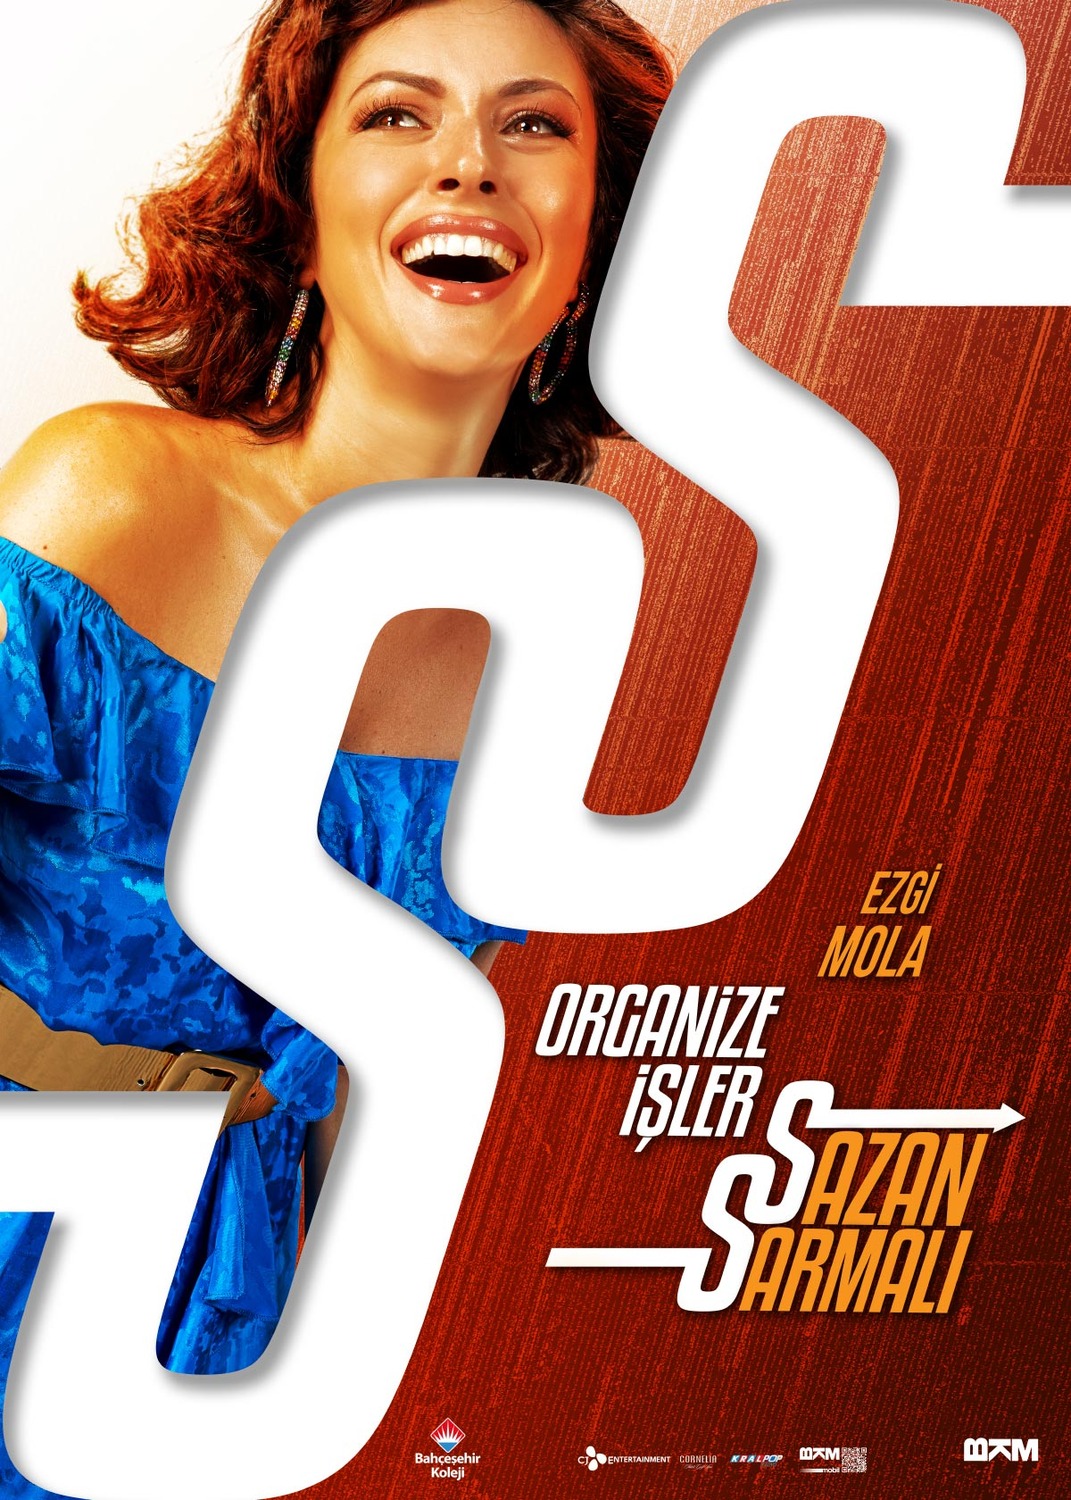 Extra Large Movie Poster Image for Organize Isler: Sazan Sarmali (#3 of 5)